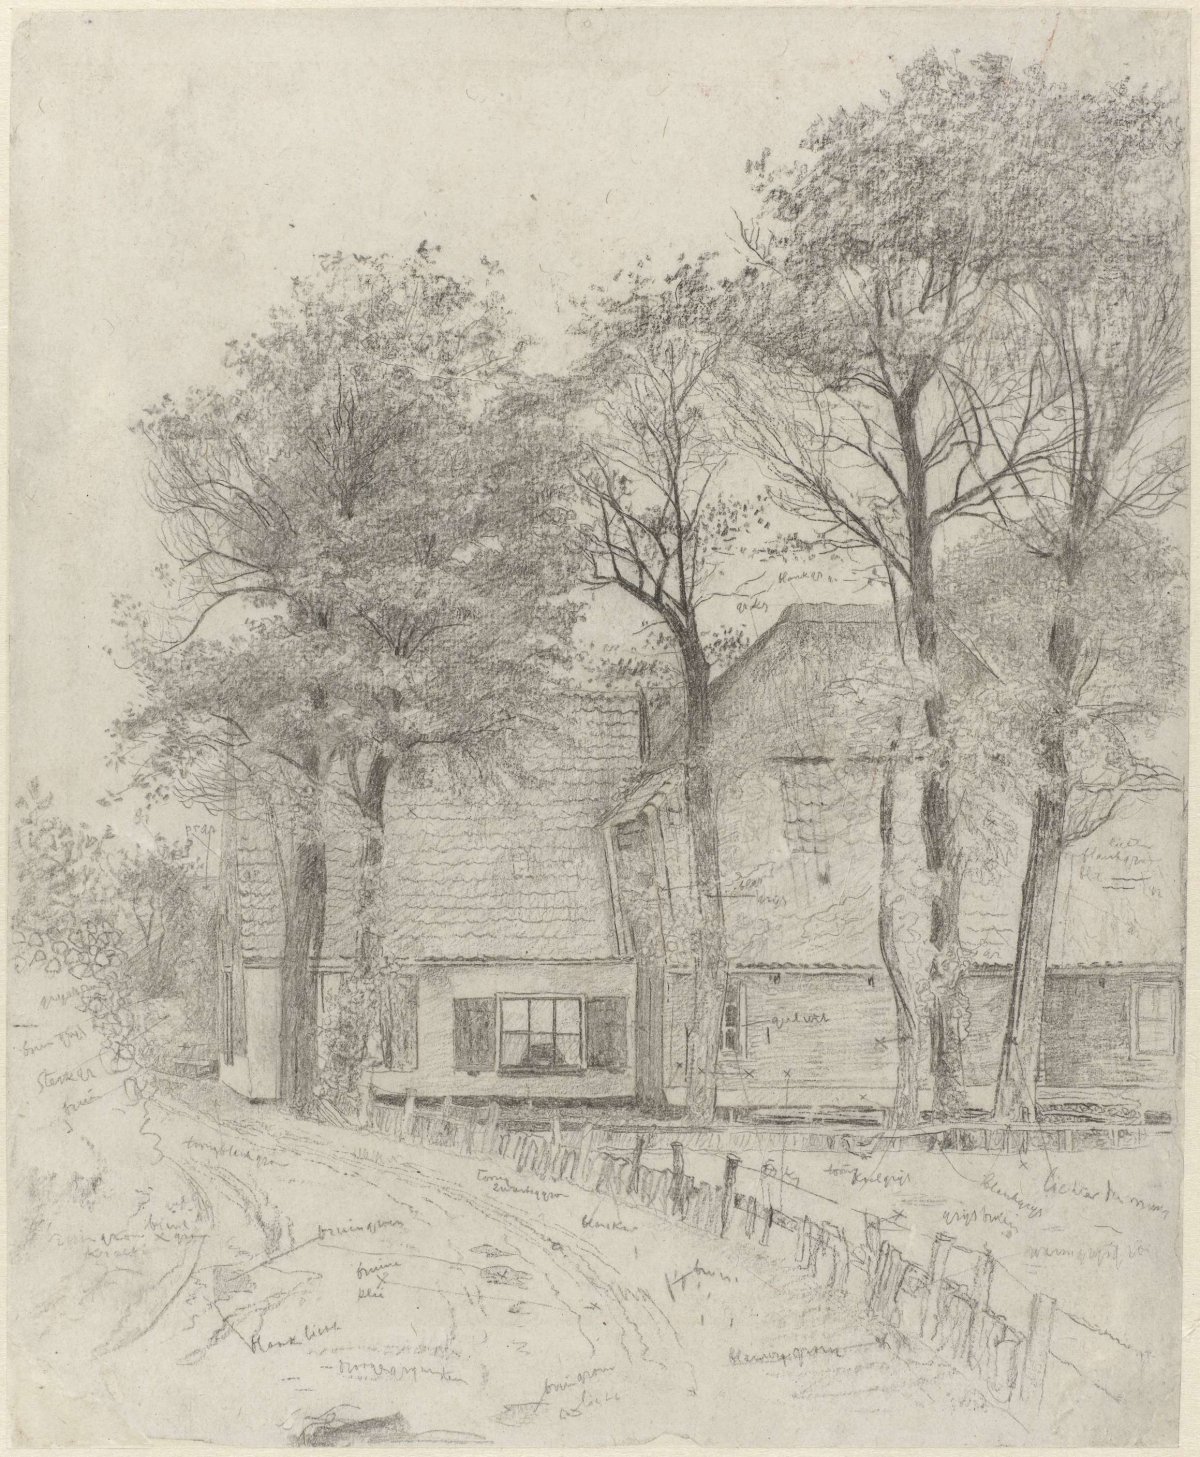 Farm near Velzen: the dwelling house and adjacent barn, seen from the road, Gerrit Willem Dijsselhof, 1876 - 1924